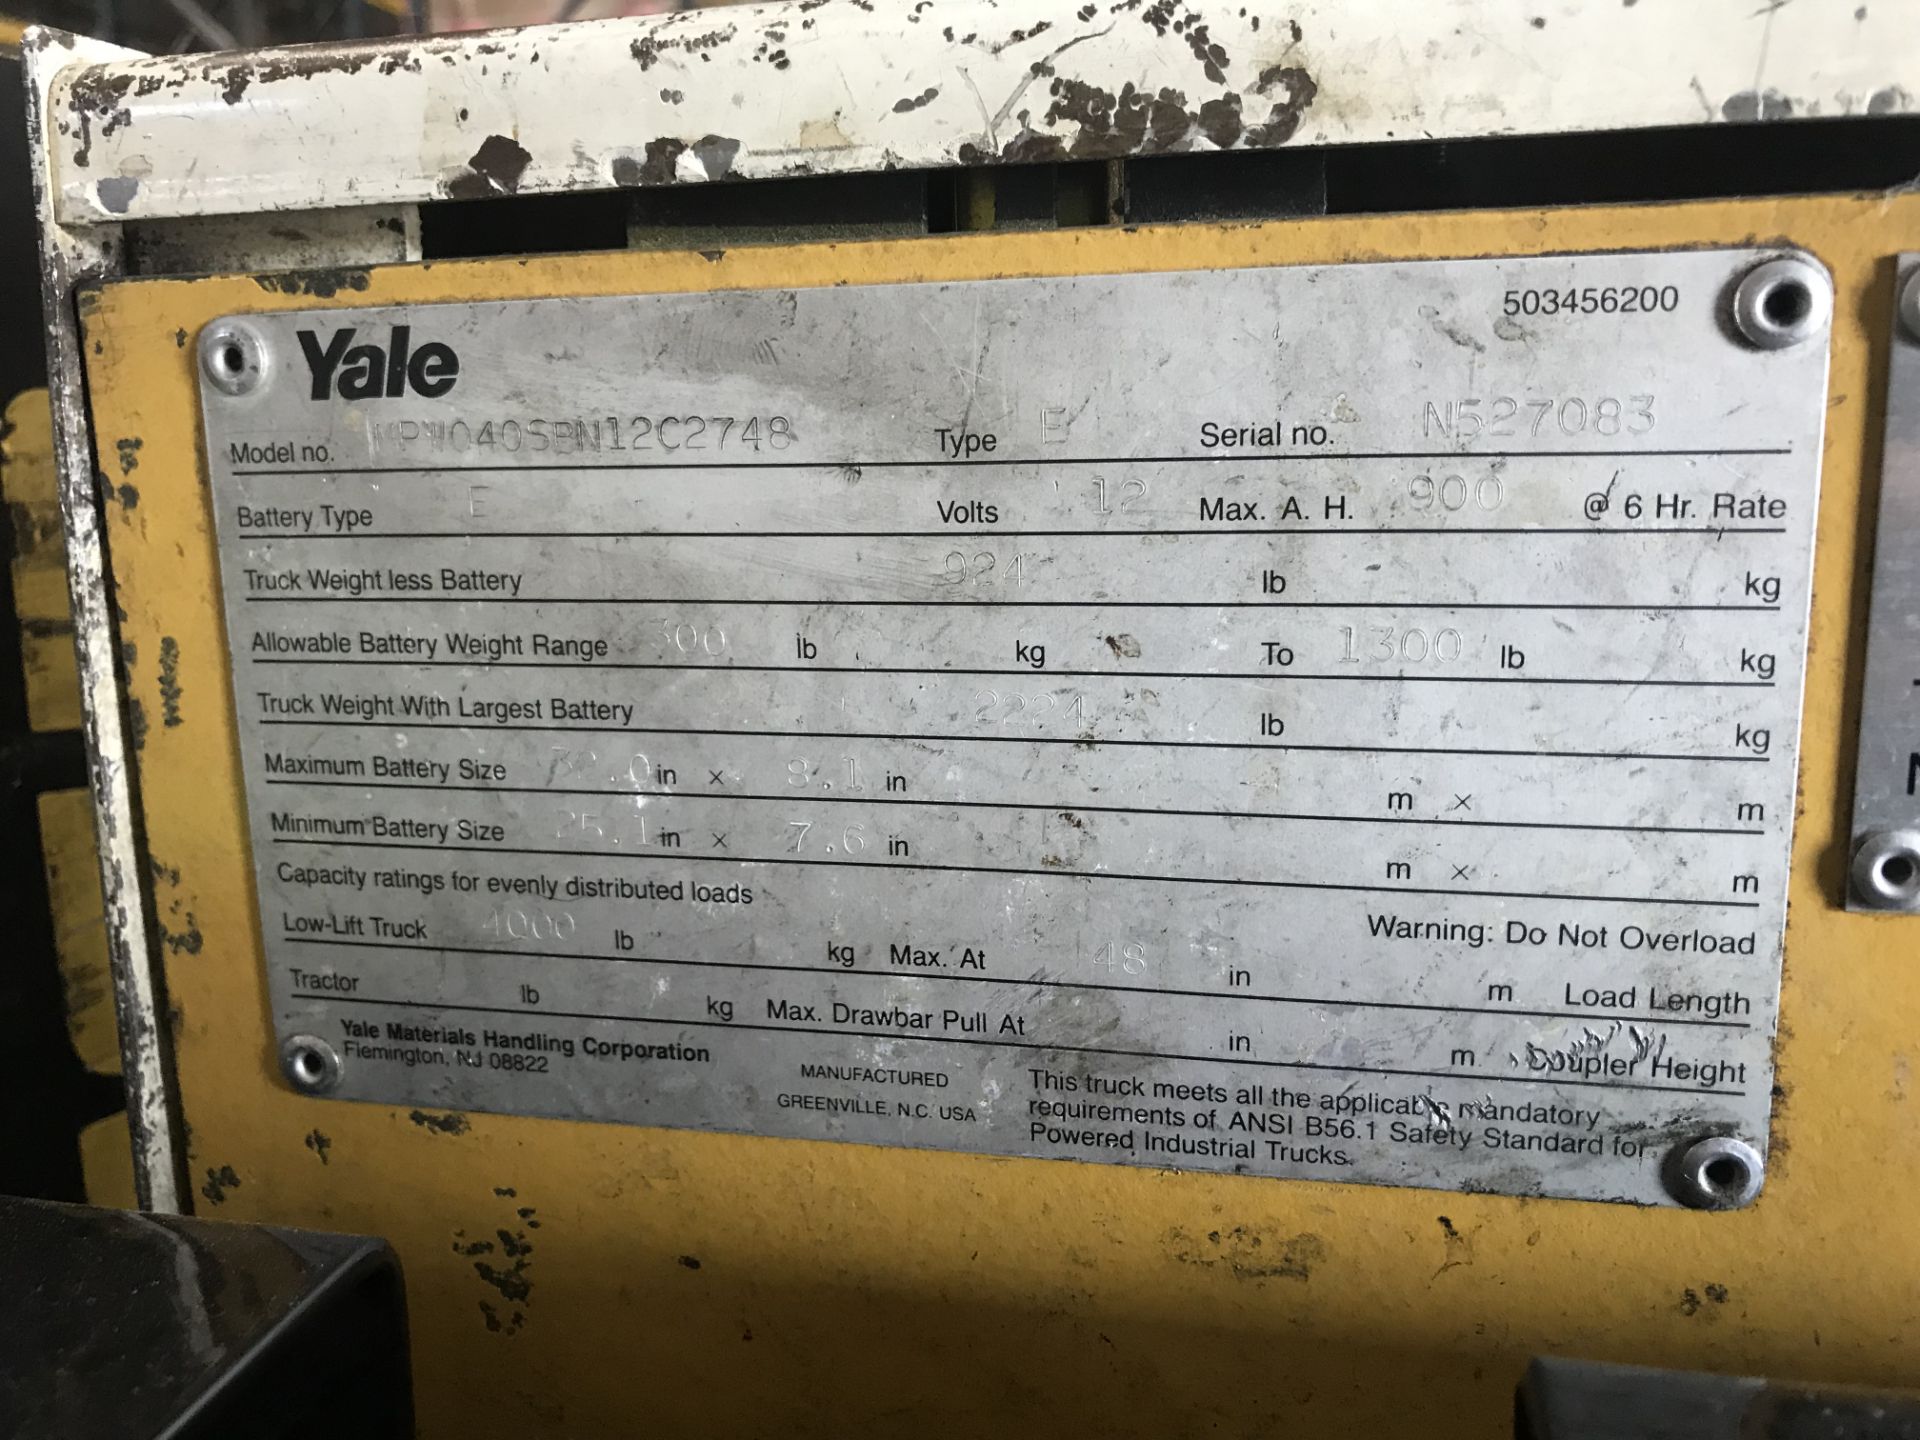 Yale Electric Pallet Jack, Model# MPW040SBN12C2748, Serial# N527083, 12 Volt Battery, 4000 lbs - Image 2 of 5